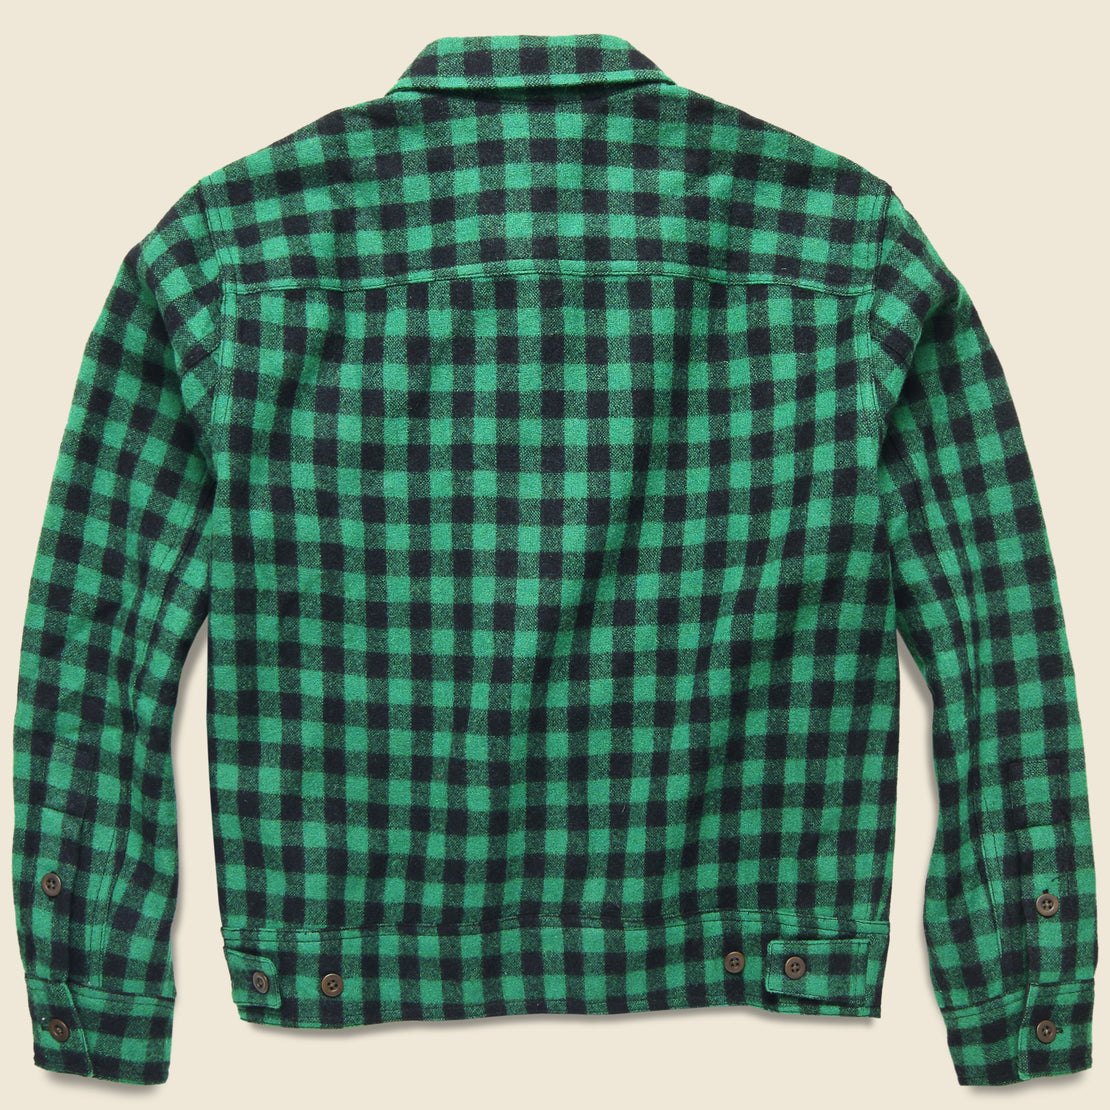 Strongbuilt Wool Check Overshirt - Green/Black